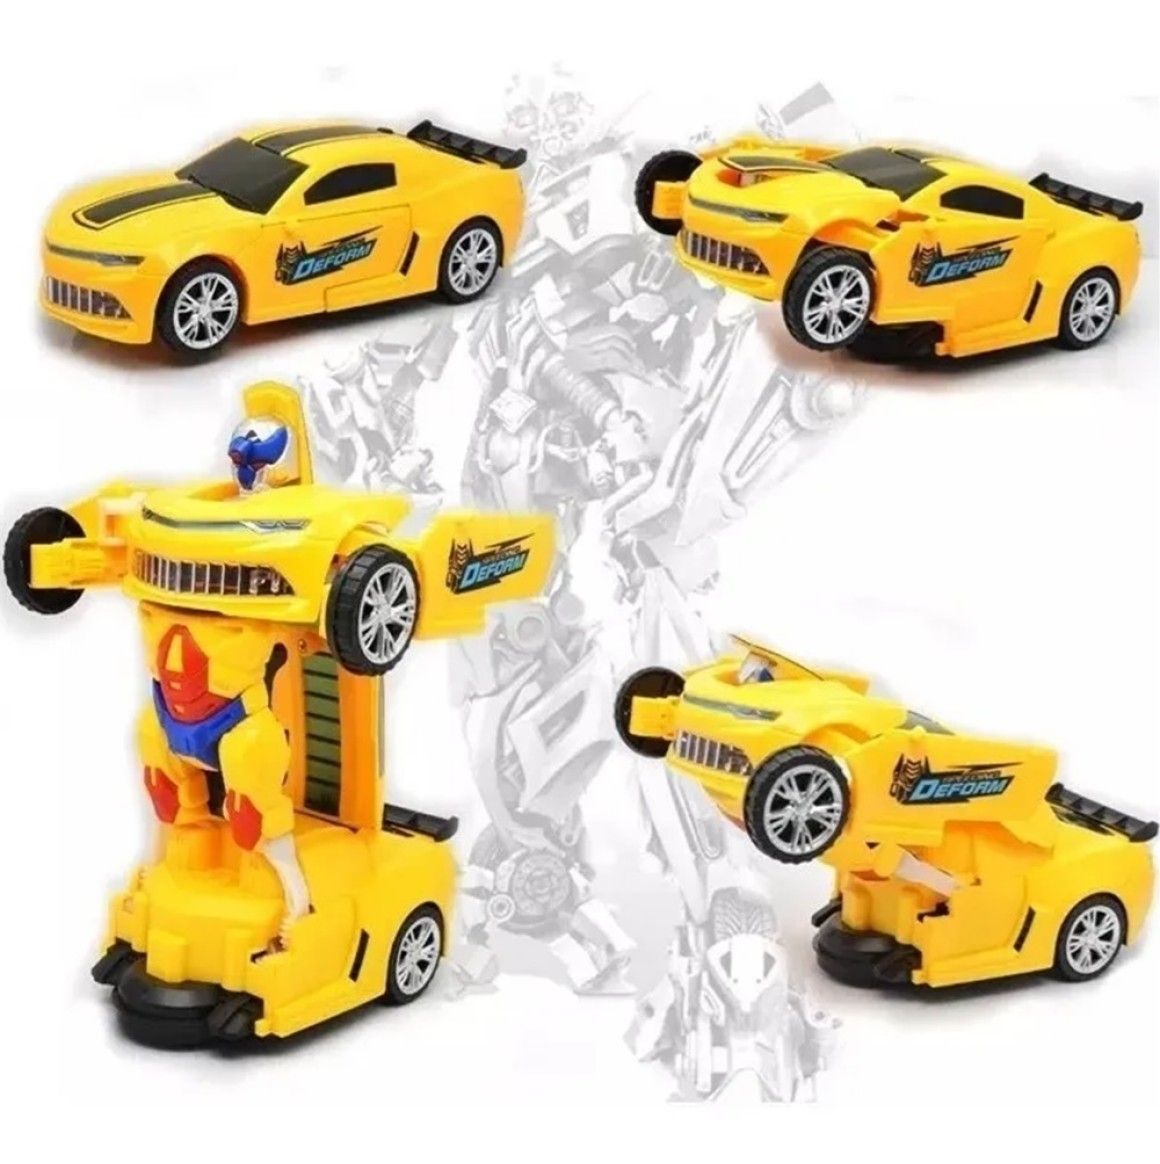 Carro Transformers Camaro Amarelo Toy King tk-1588